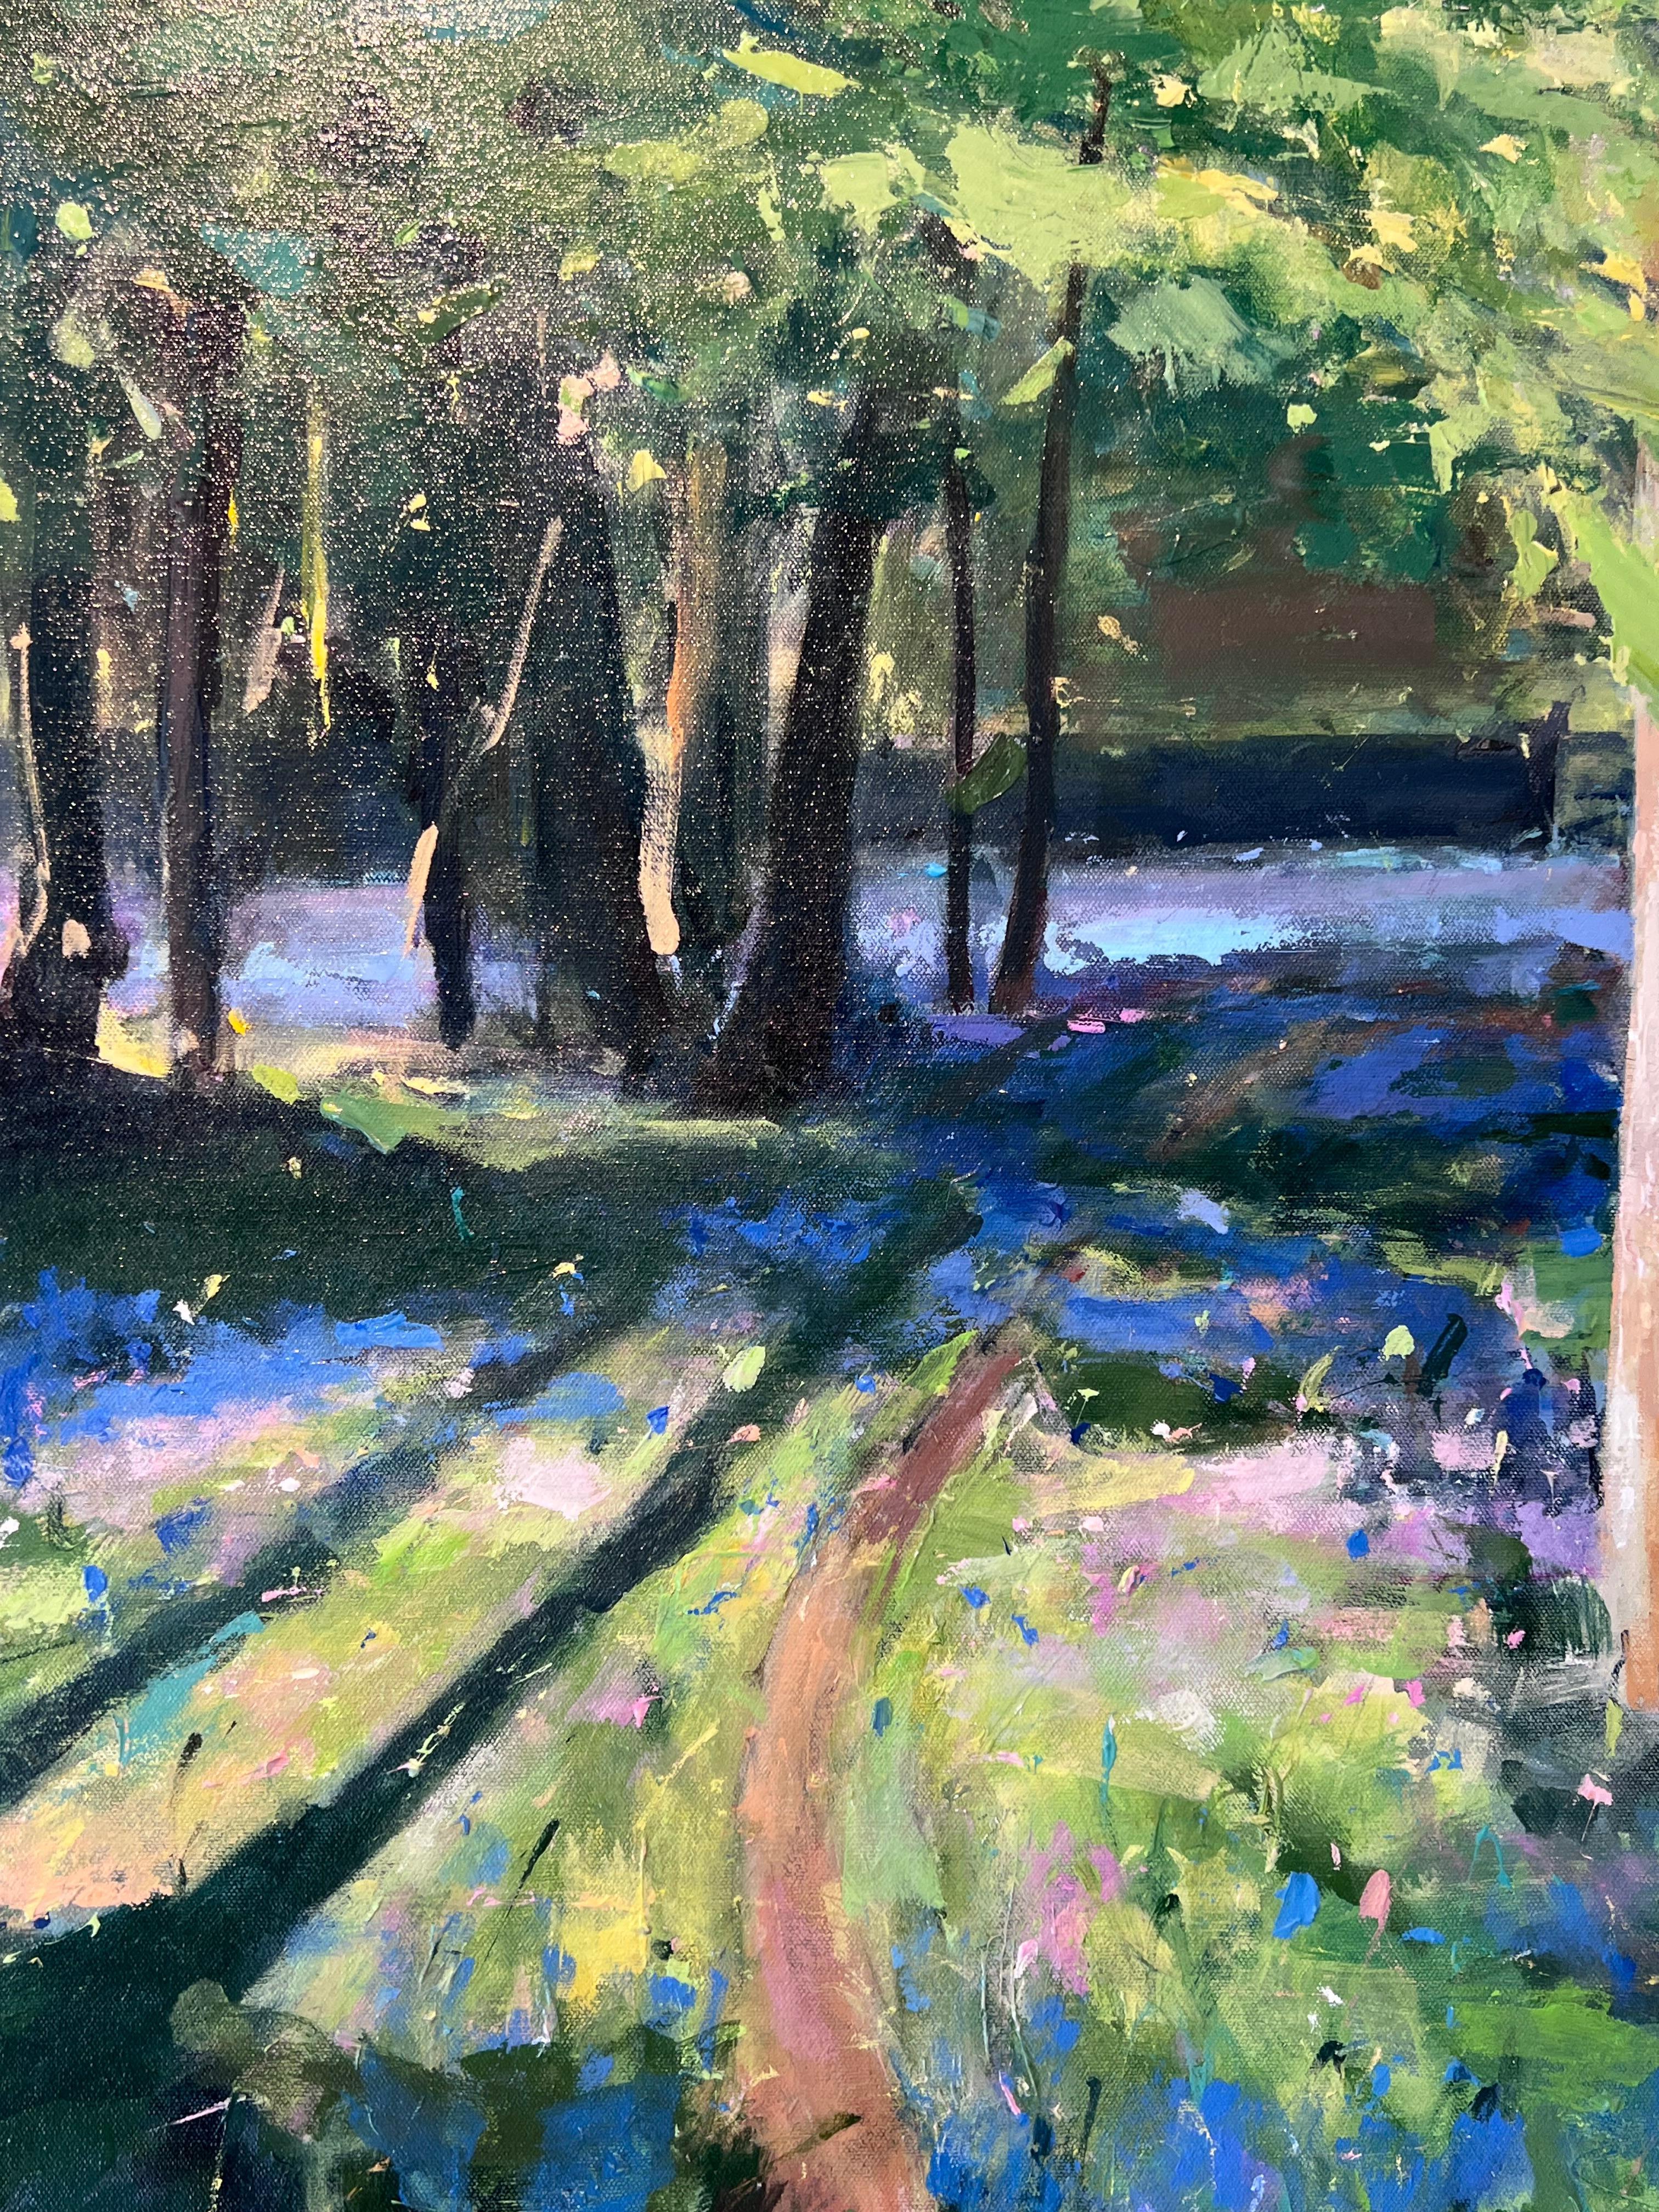 Calling Me Home - impressionnisme original - peinture de paysage floral - art moderne - Bleu Landscape Painting par Sarah Ollerenshaw